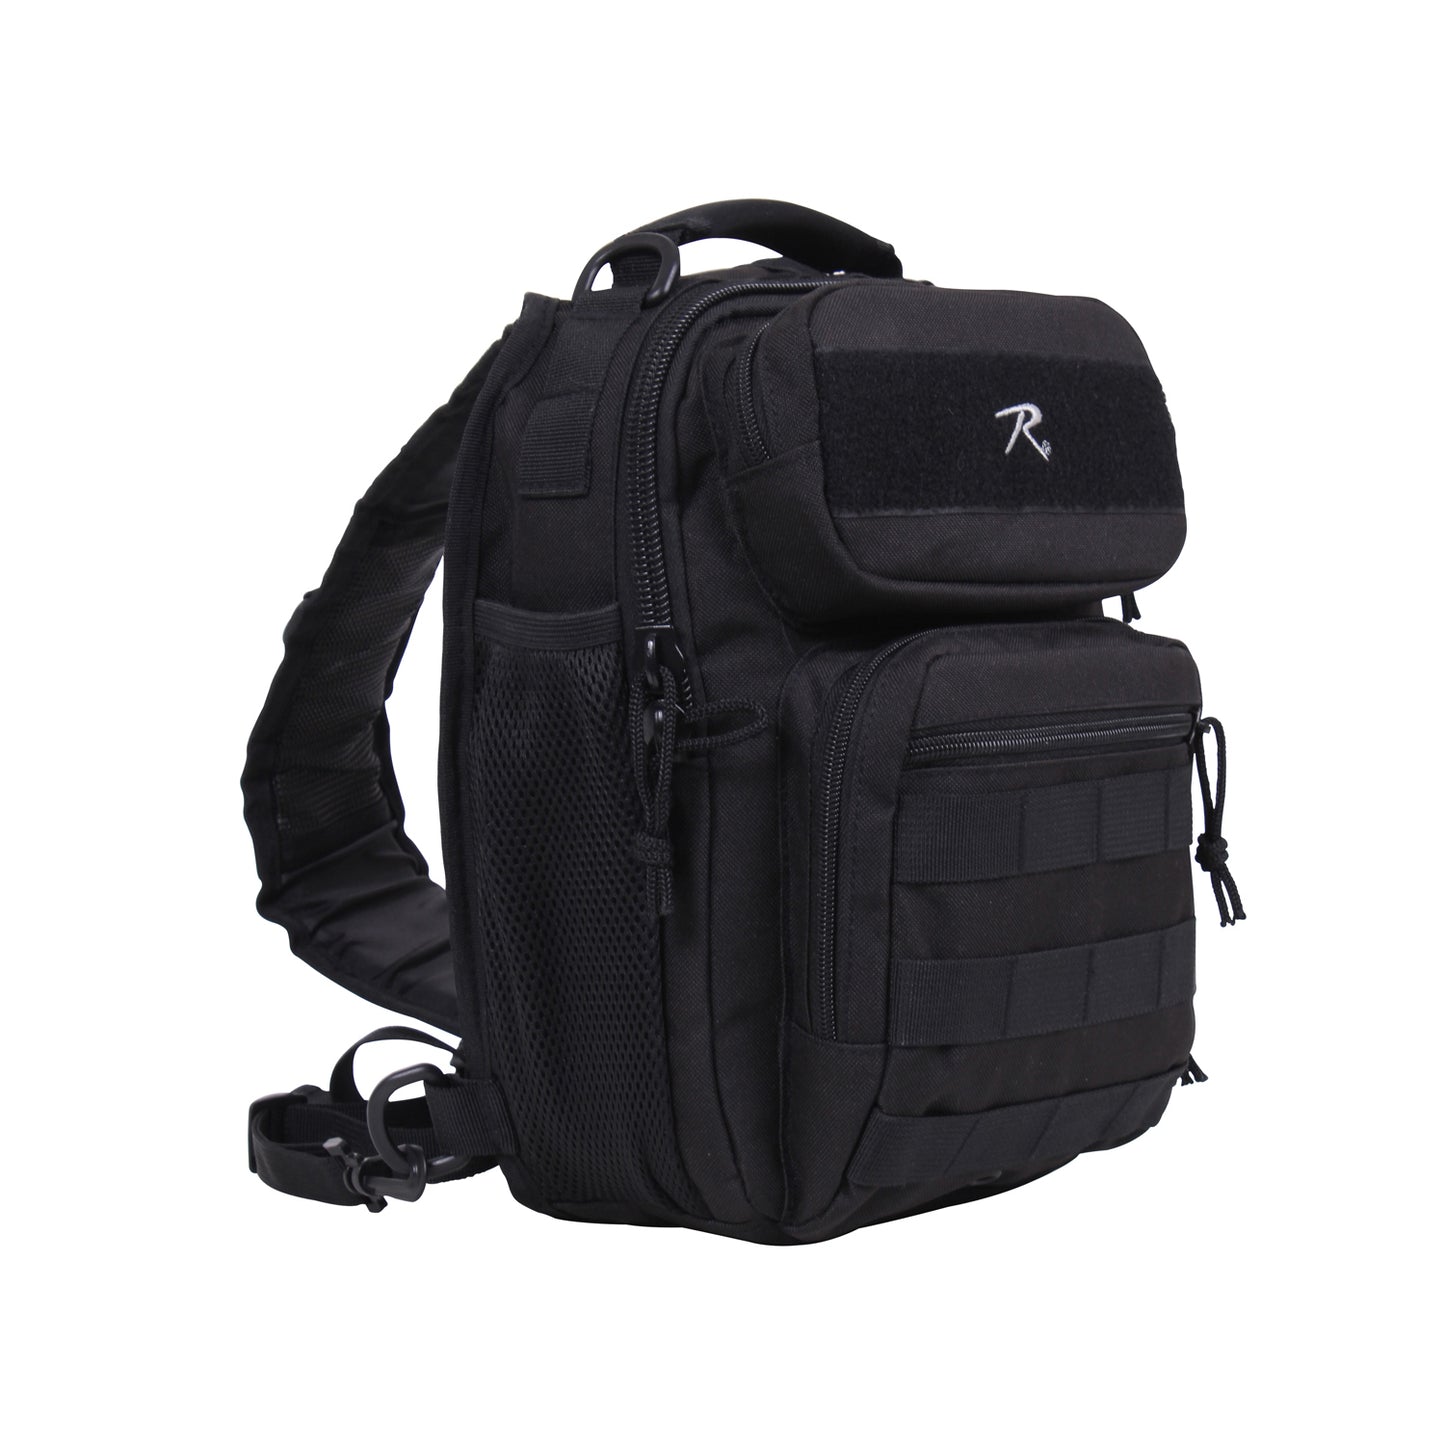 Black or Coyote Brown Compact Tactisling Shoulder Bag Travel Duffle Hiking Bag